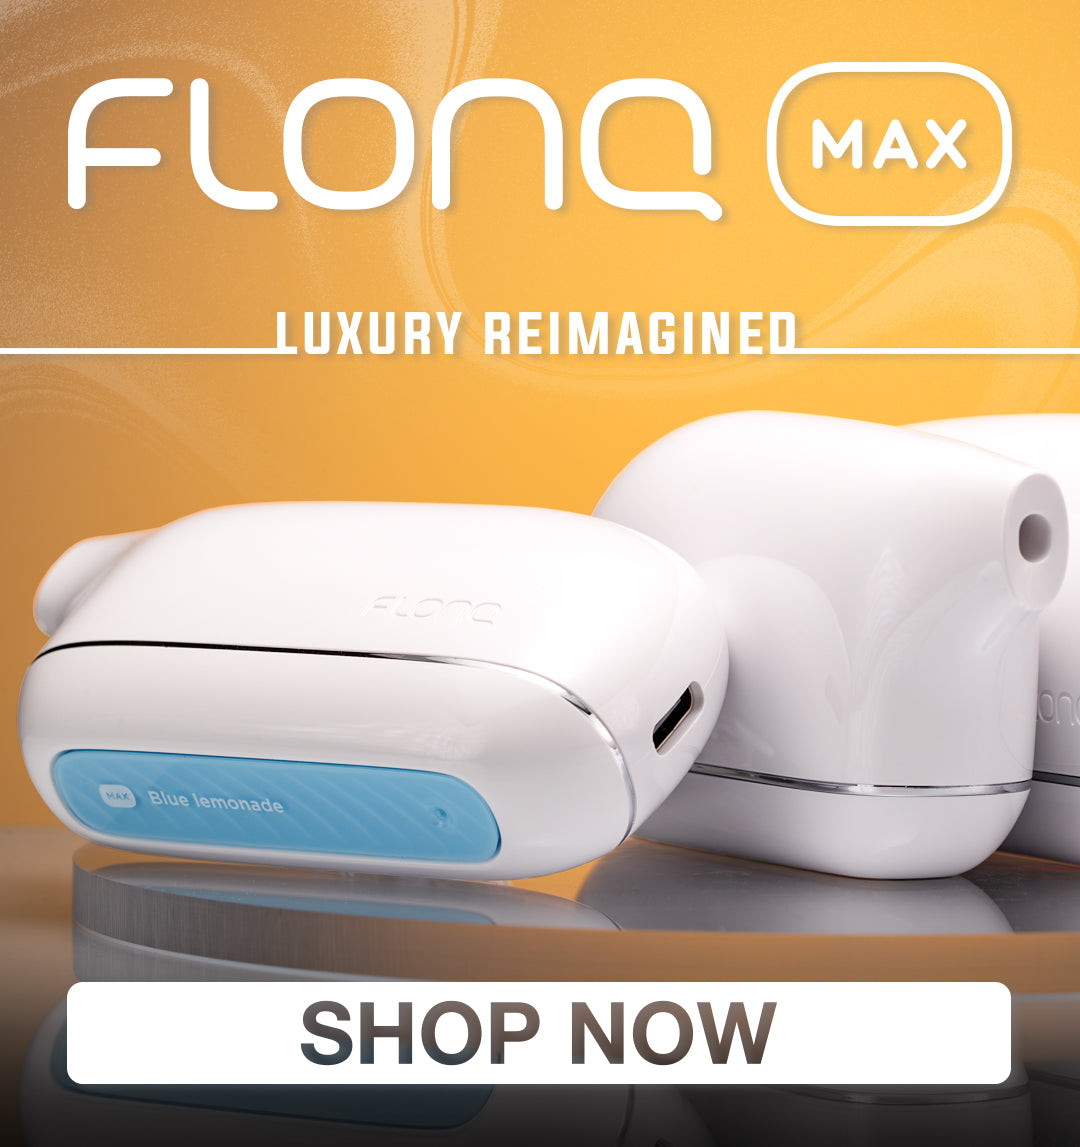 Flonq Max Advertisement